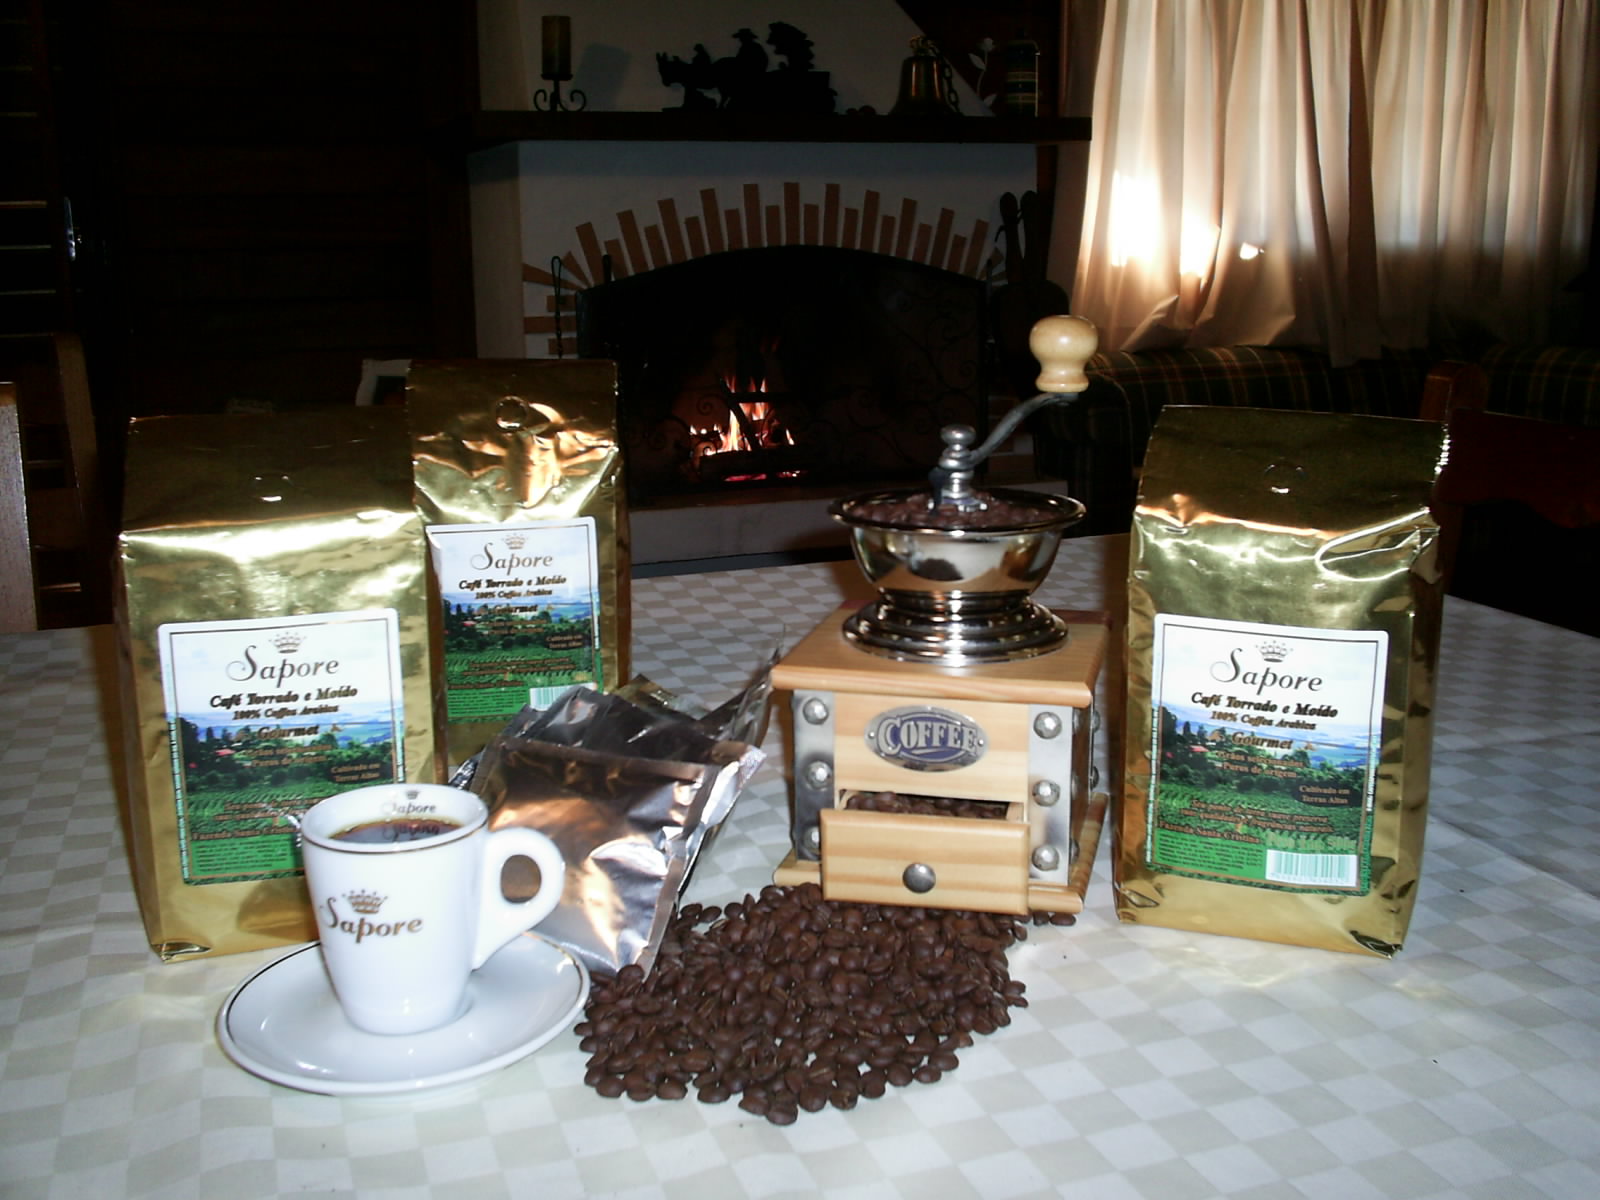 Sapore Coffee, ground roasted coffee